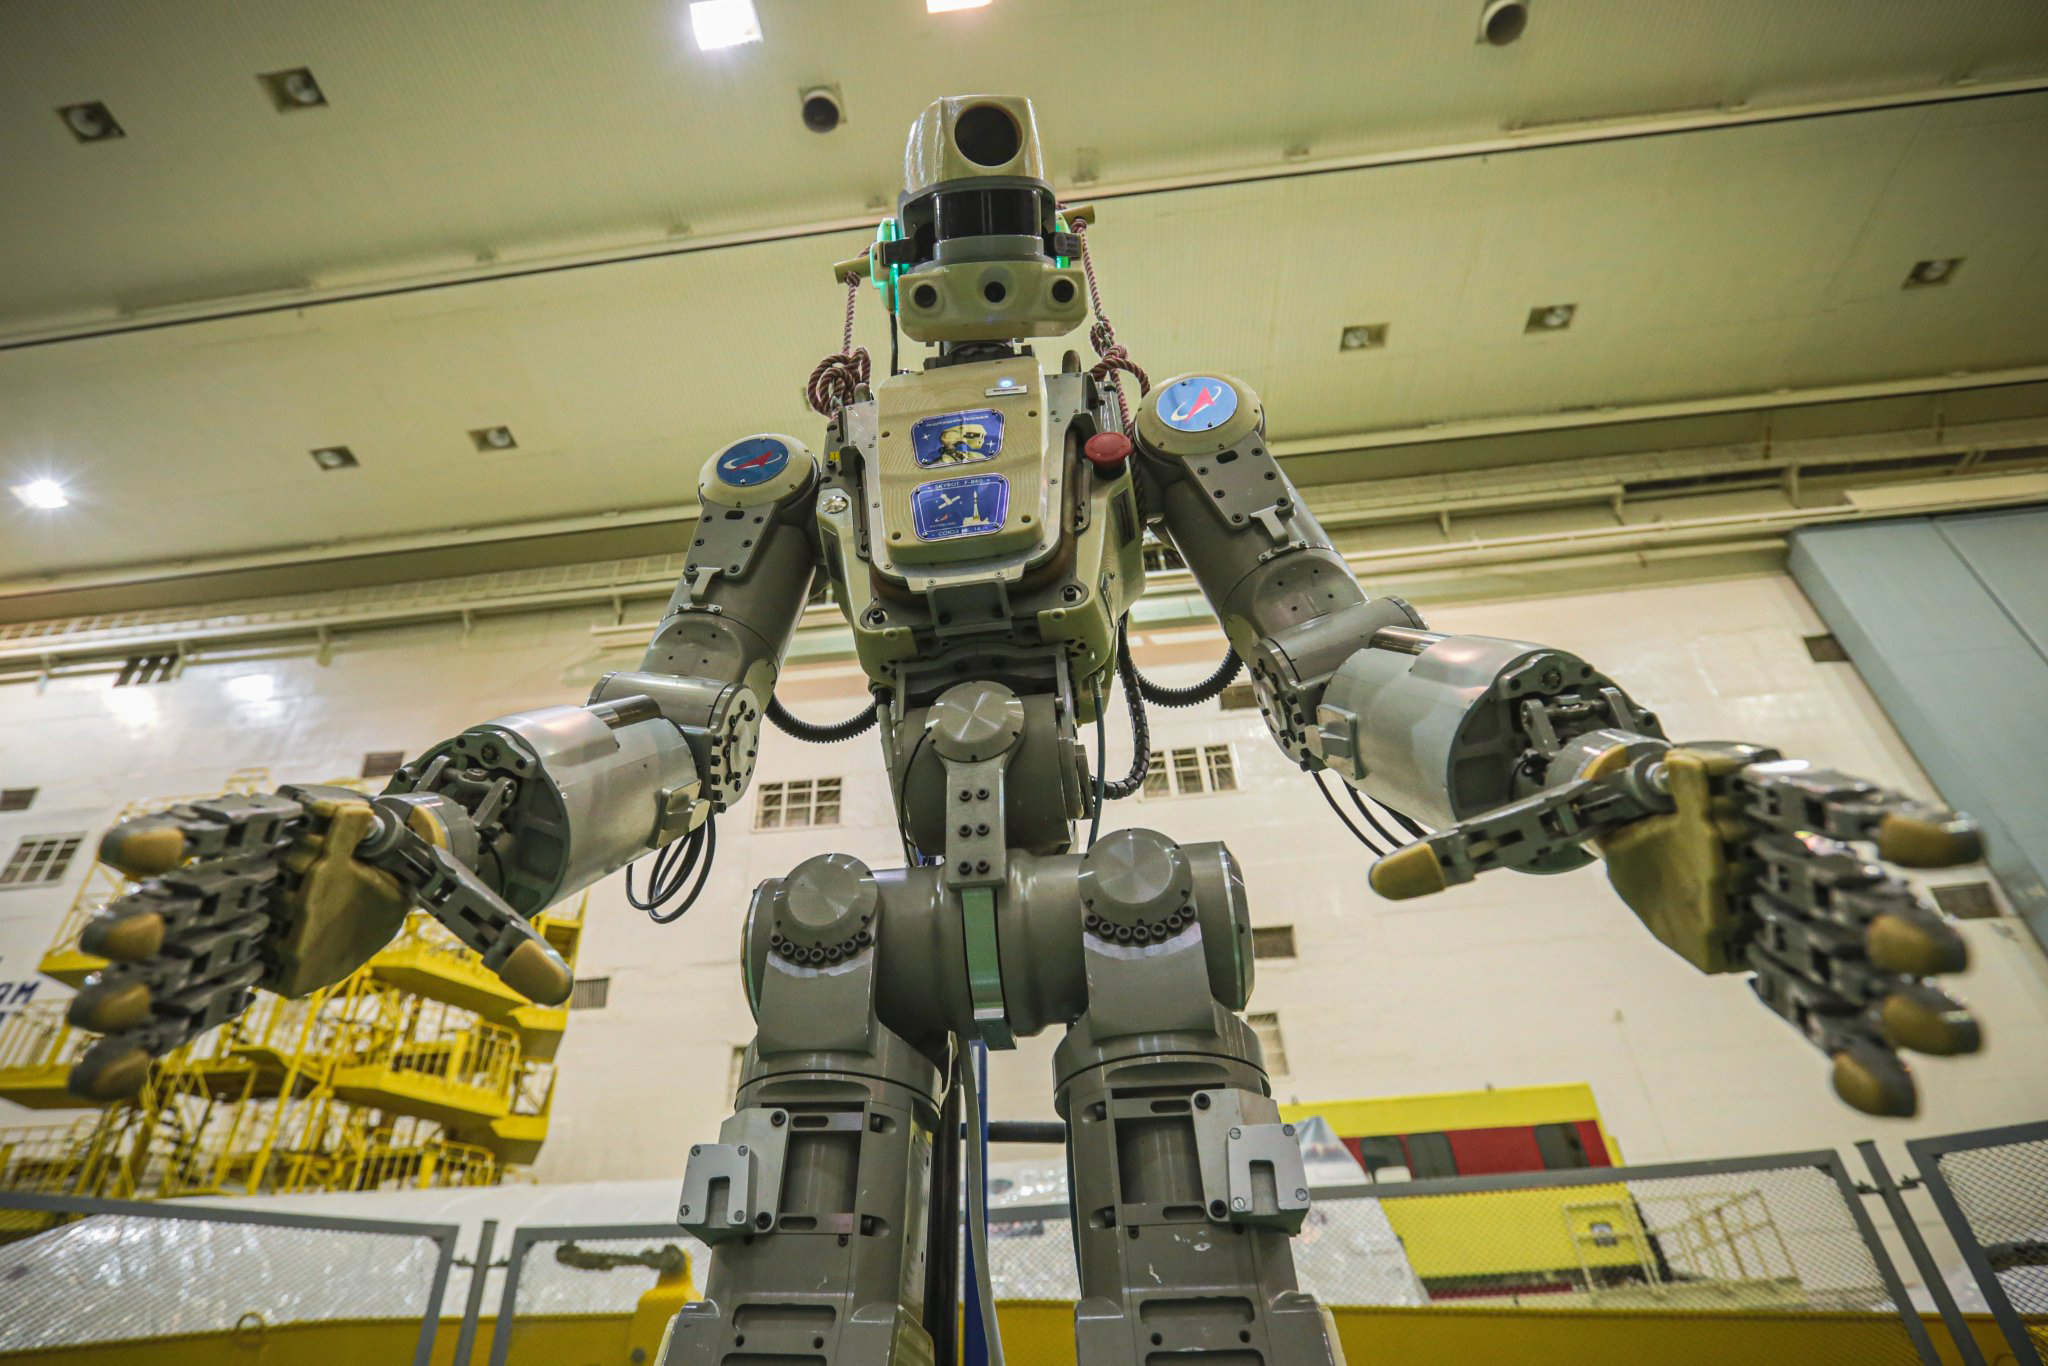 Meet Skybot F-850, the Humanoid Robot 